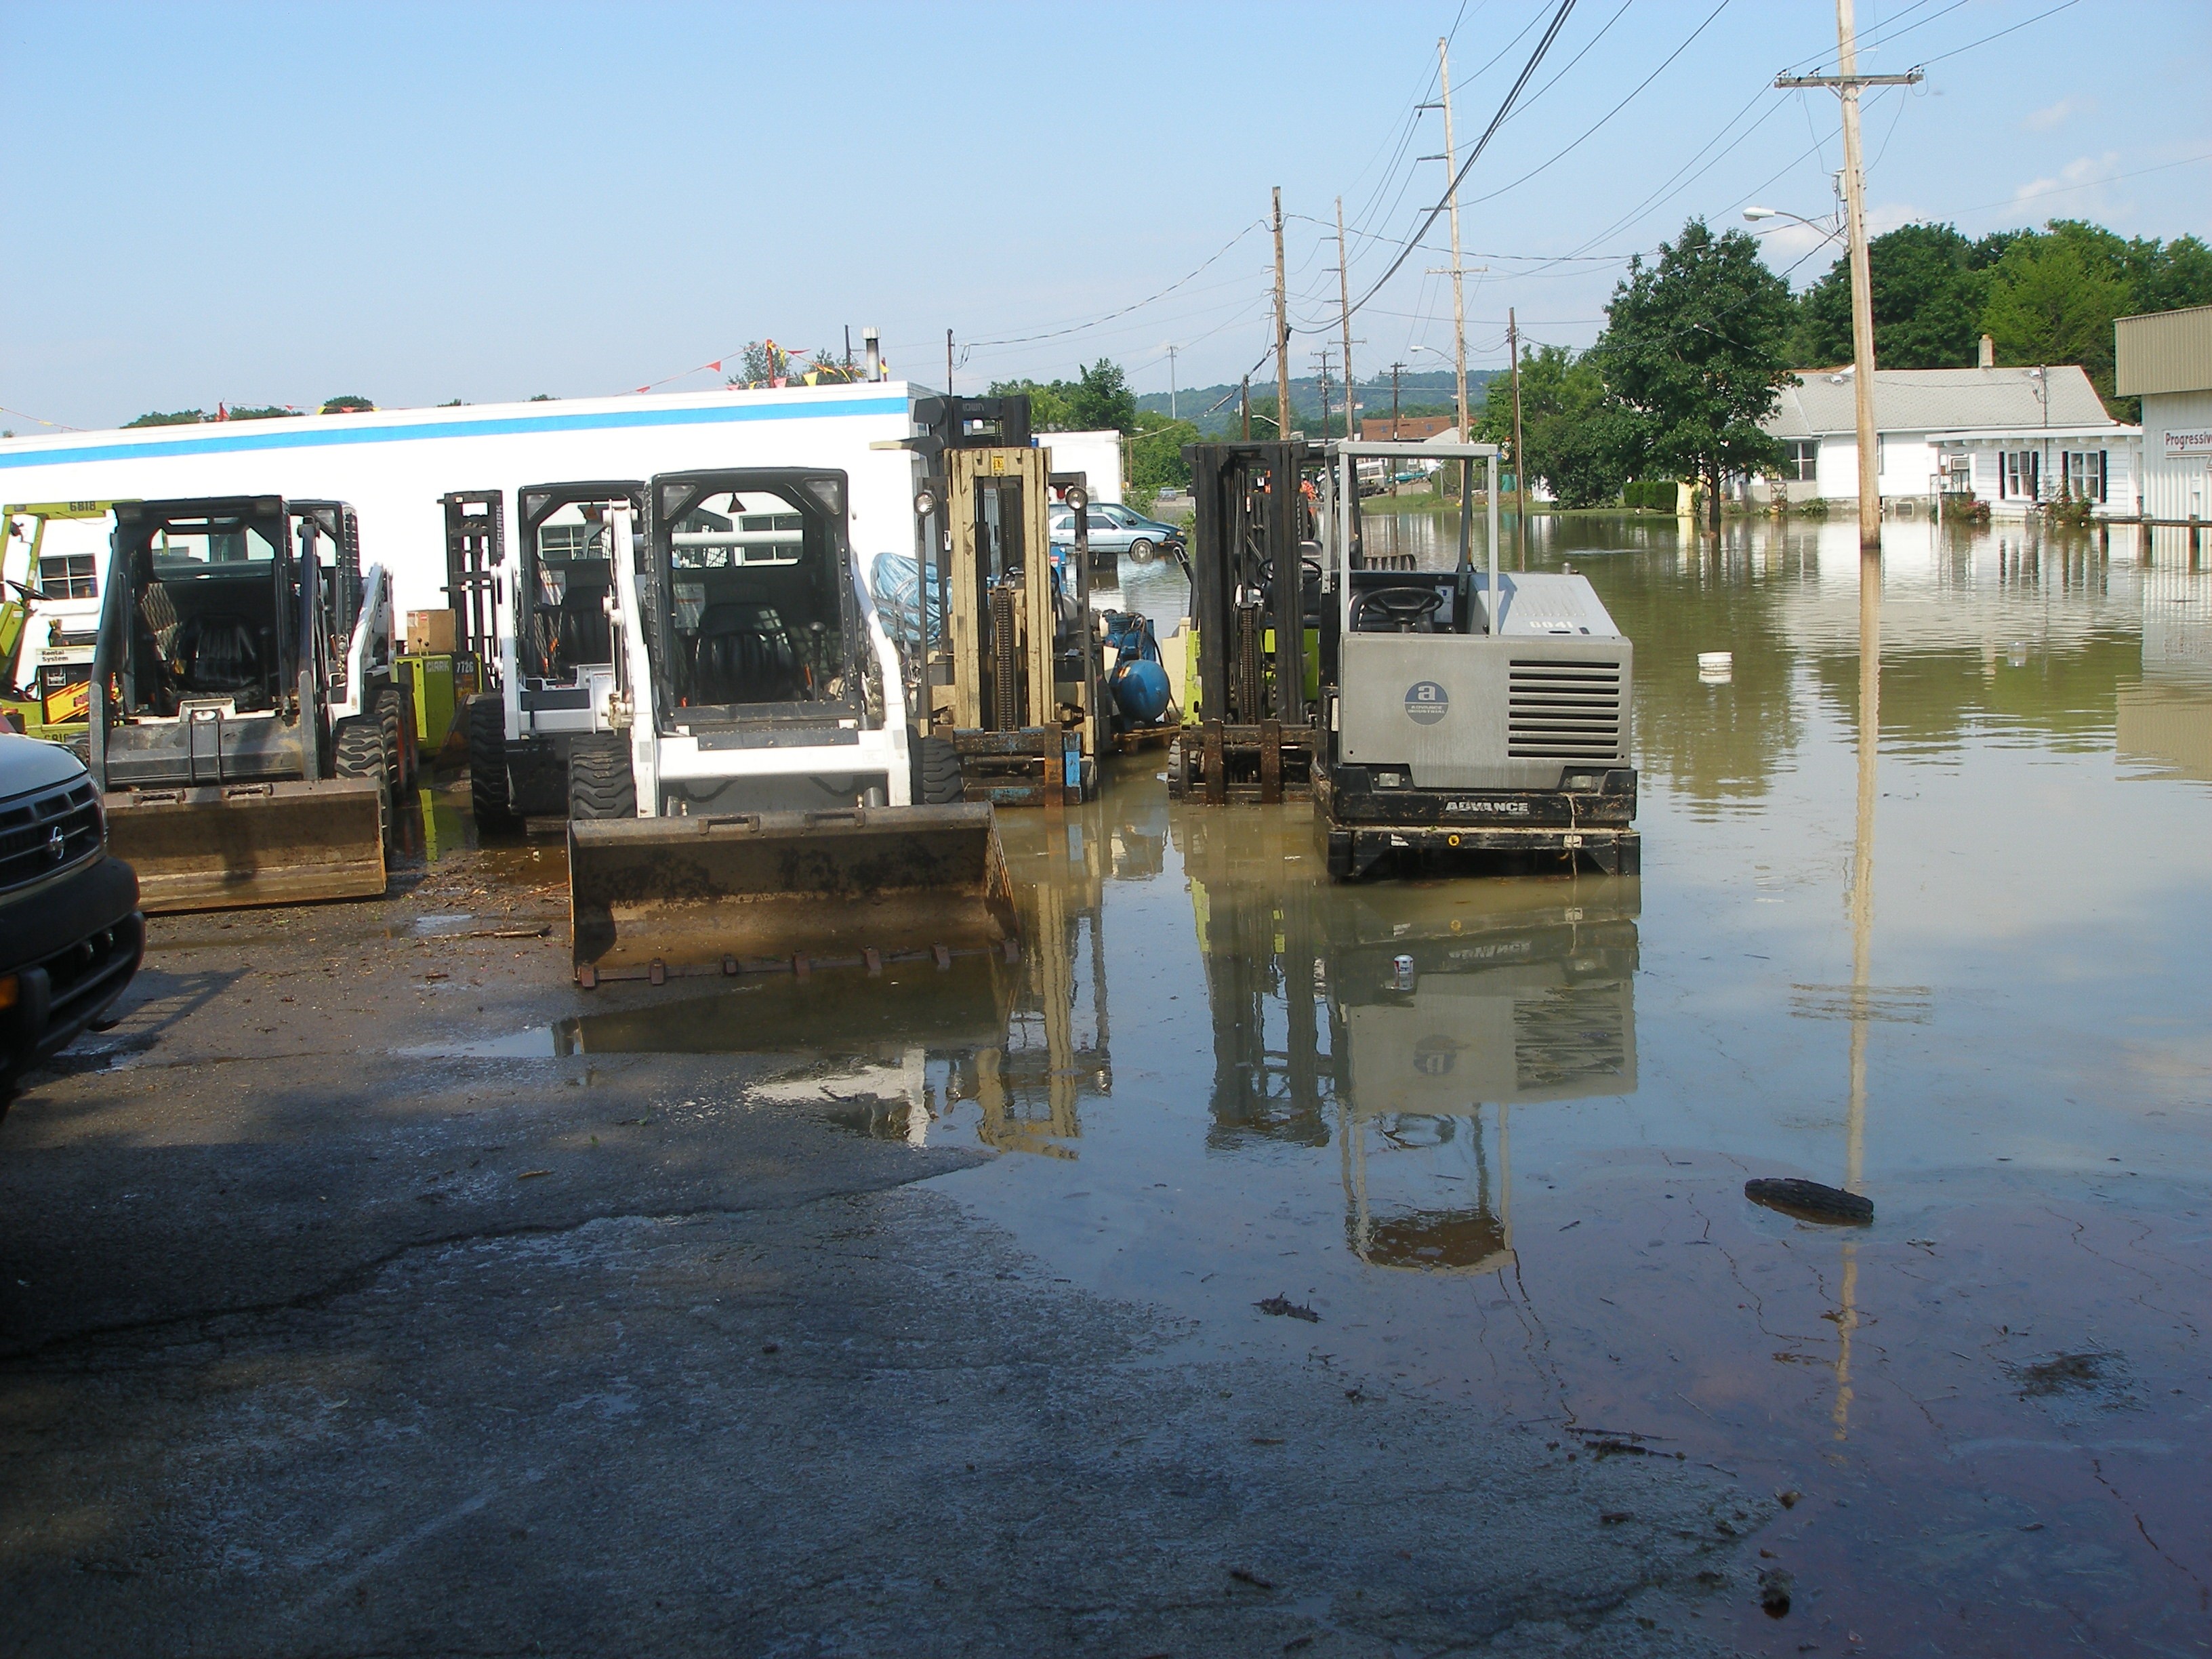 06-29-06  Reponse - Flooding